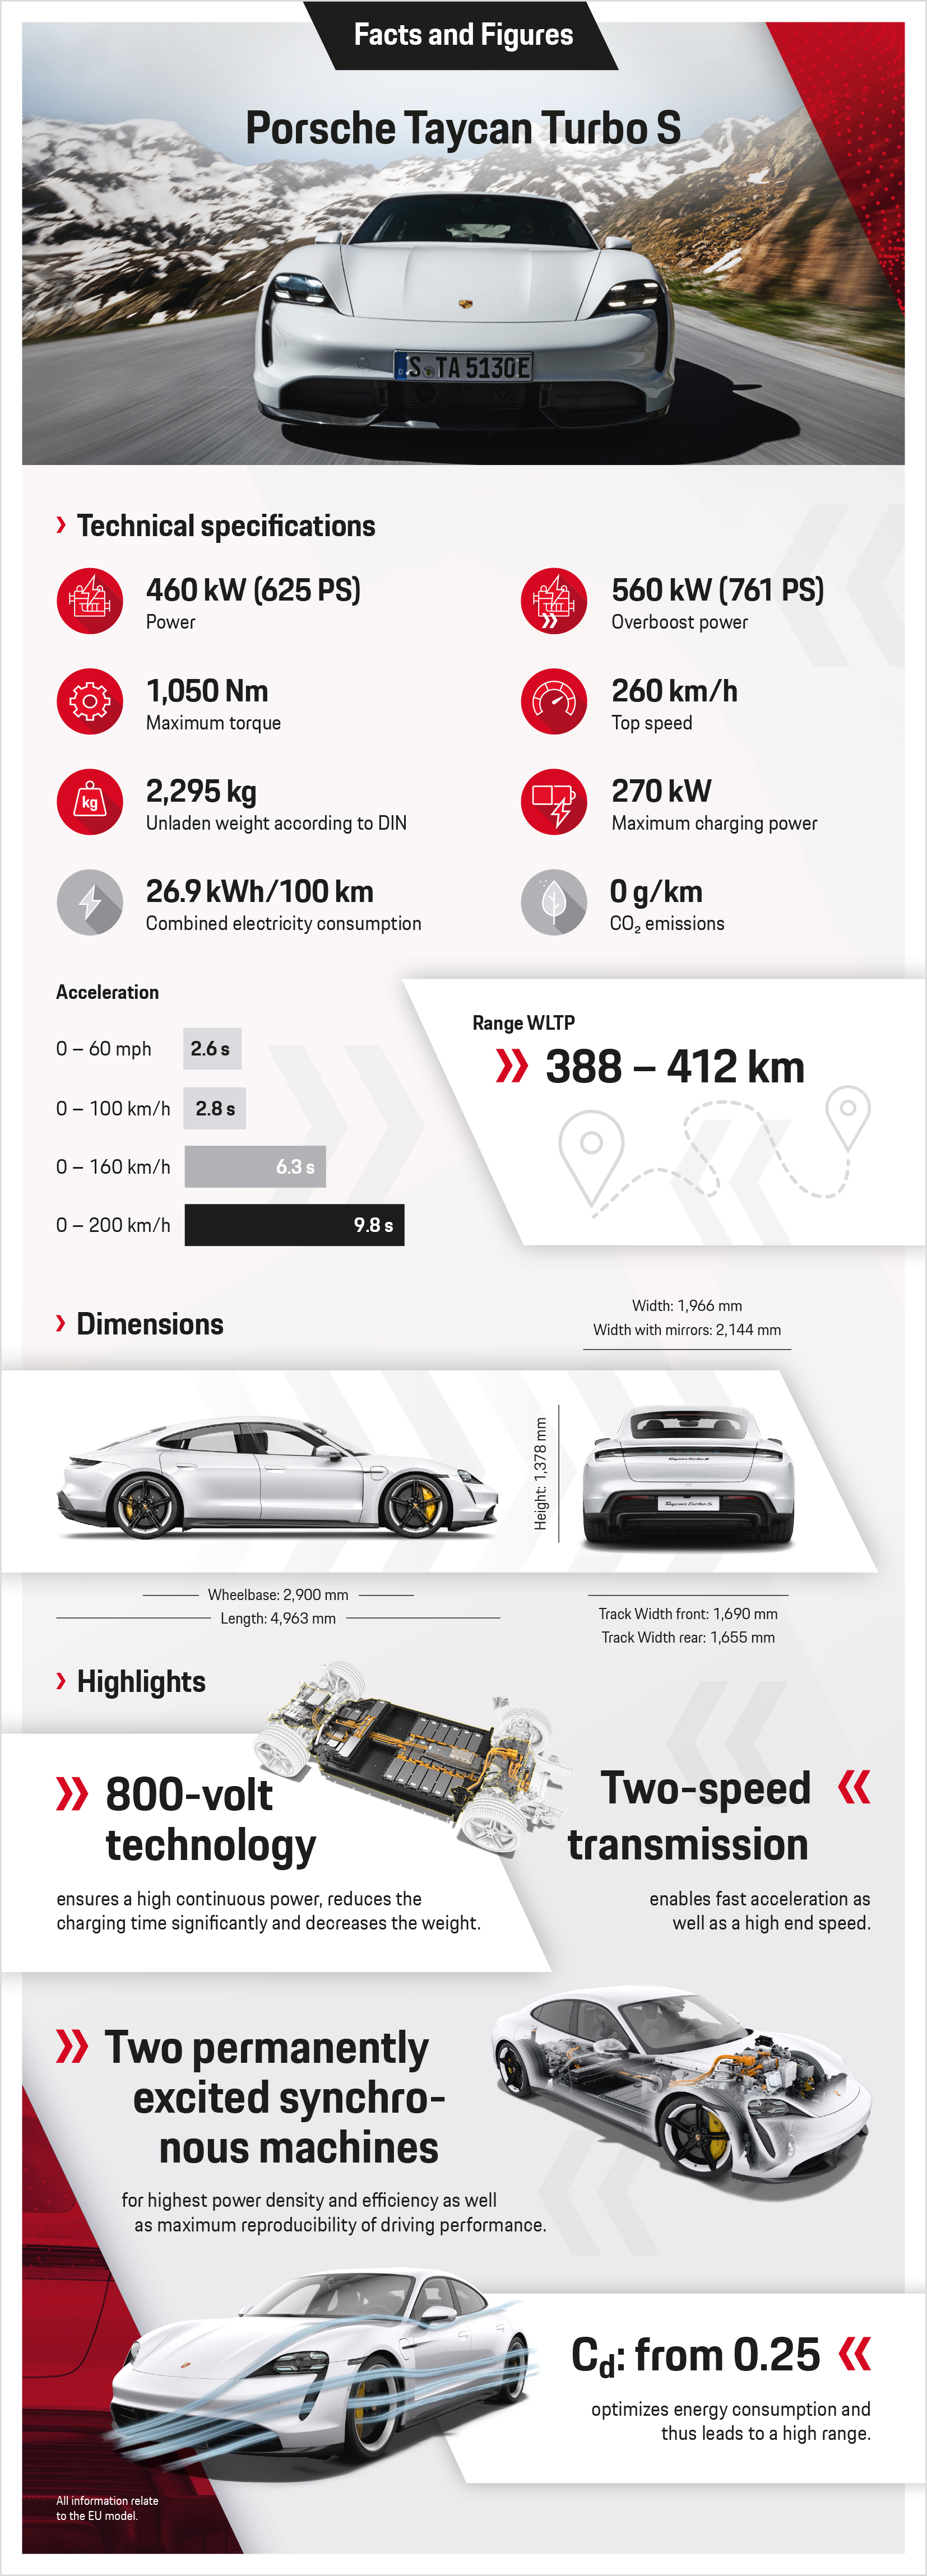 World premiere of the Porsche Taycan: Sports car, sustainably redesigned Porsche Beaverton